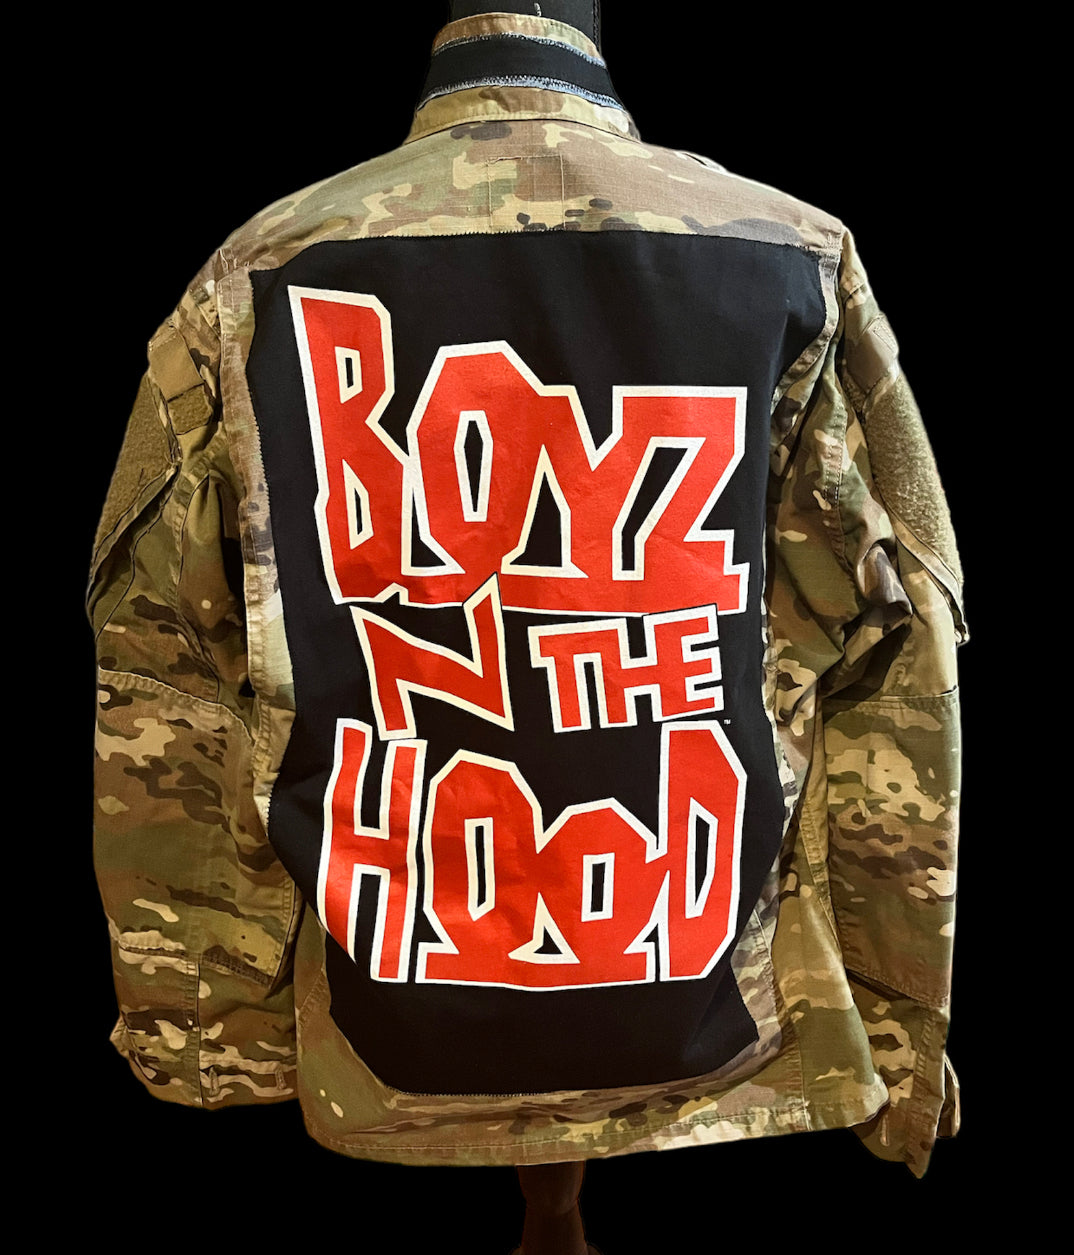 Customized “Boyz N The Hood” Vintage Graphic Camouflage Weatherproof Jacket